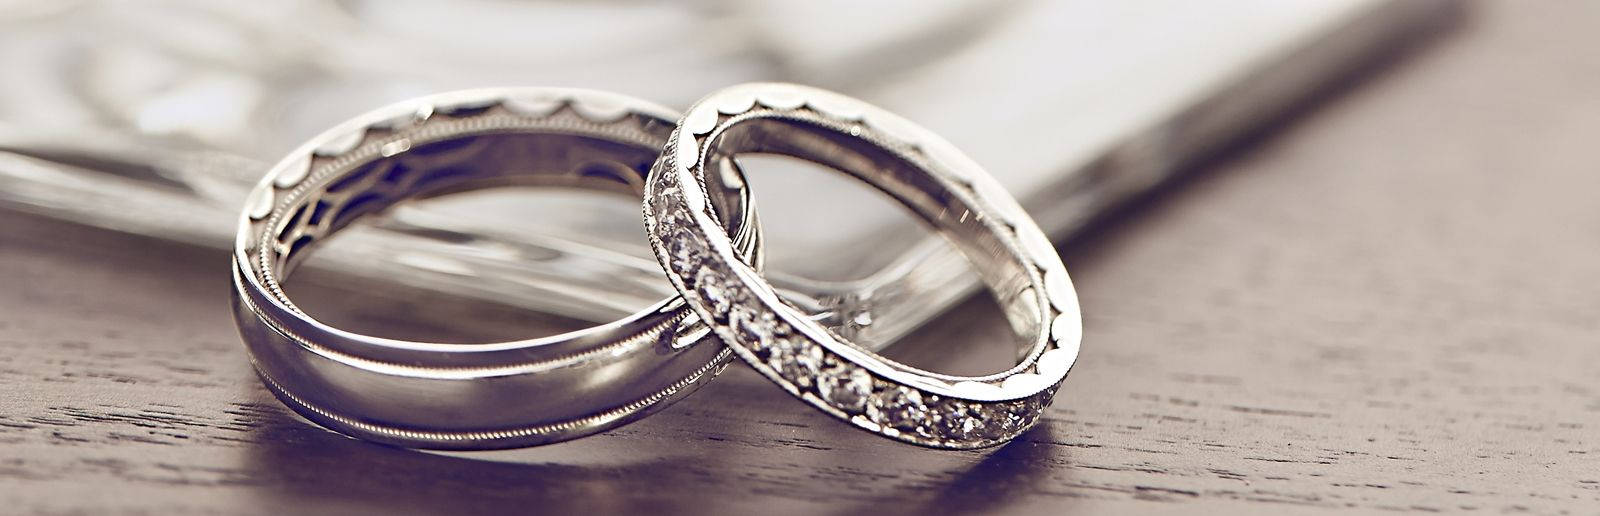 Silver With Diamond Wedding Rings